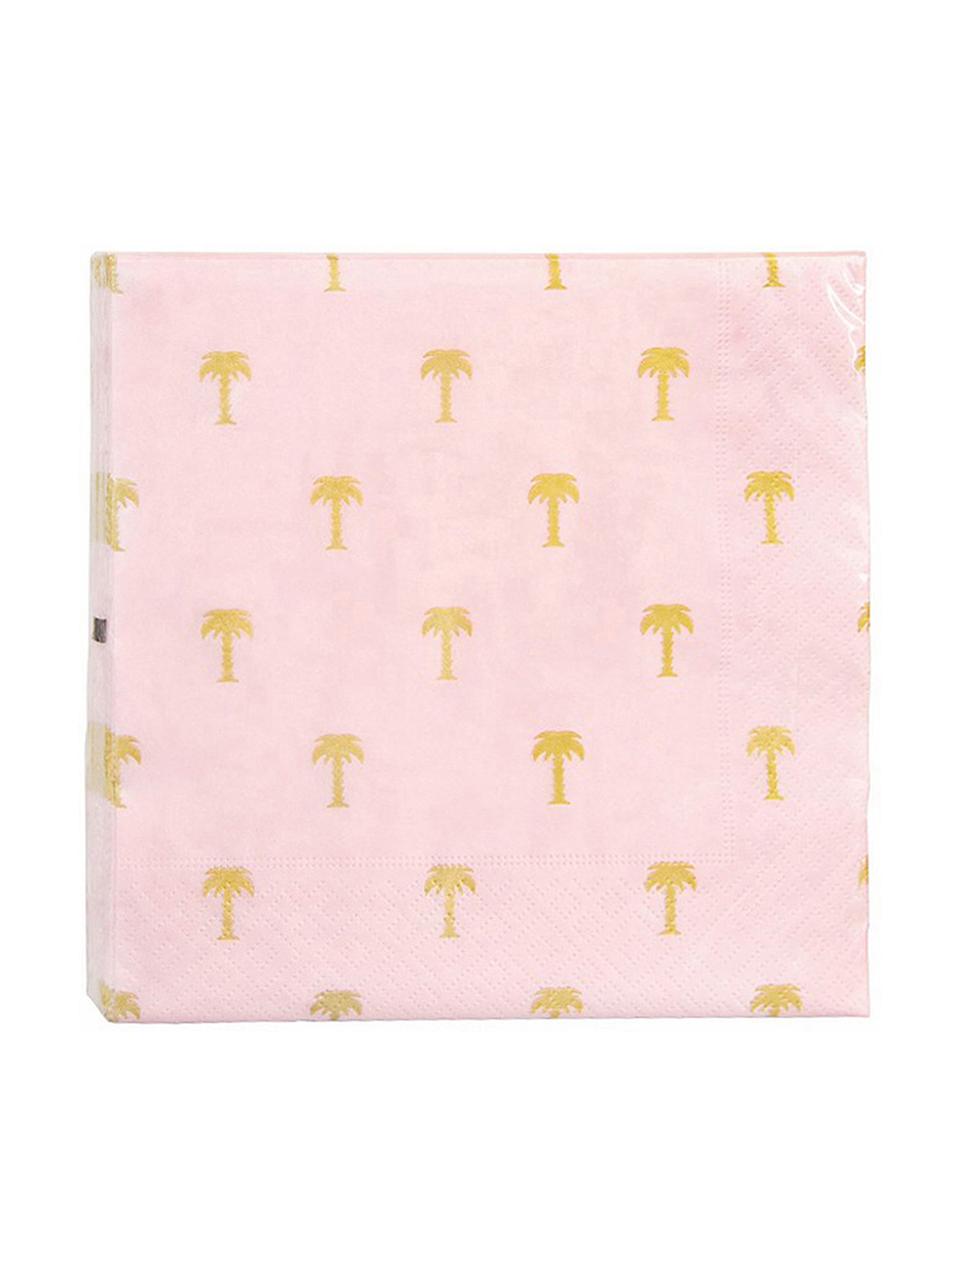 Papieren servetten Palmtree, 20 stuks, Papier, Roze, goudkleurig, 17 x 17 cm